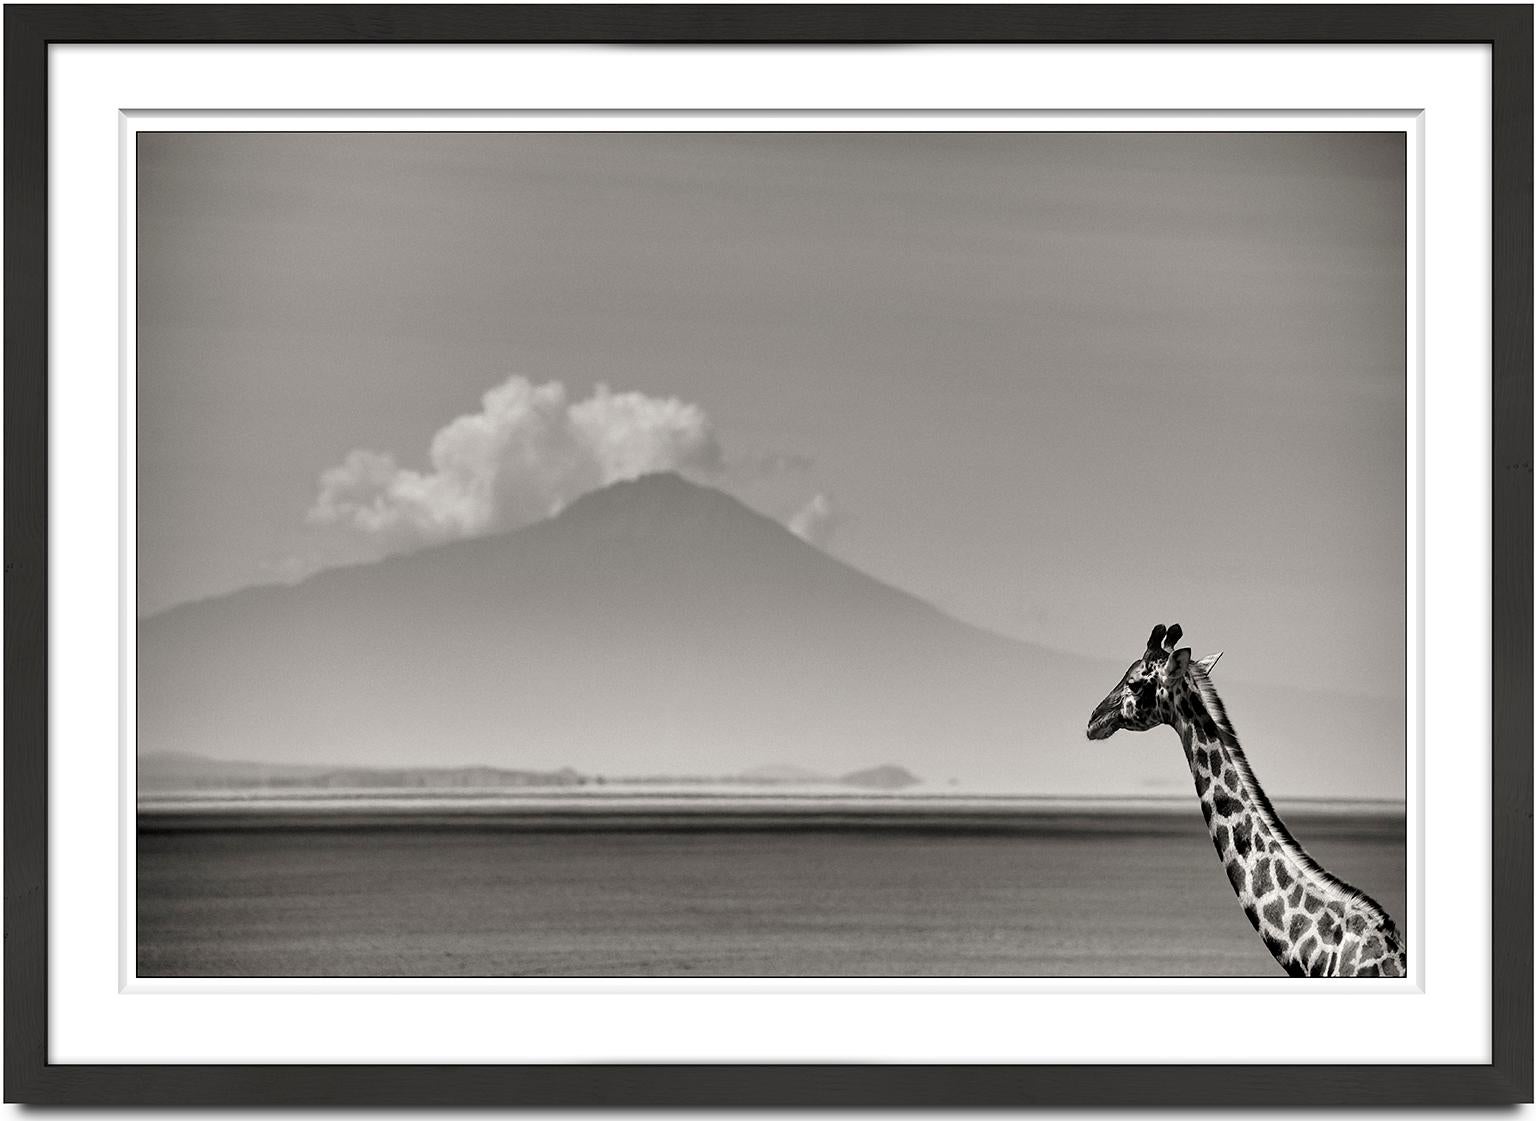 Joachim Schmeisser Black and White Photograph - Giraffe in front of MtKenya, Kenya 2019, Giraffe, wildlife, b&w photography